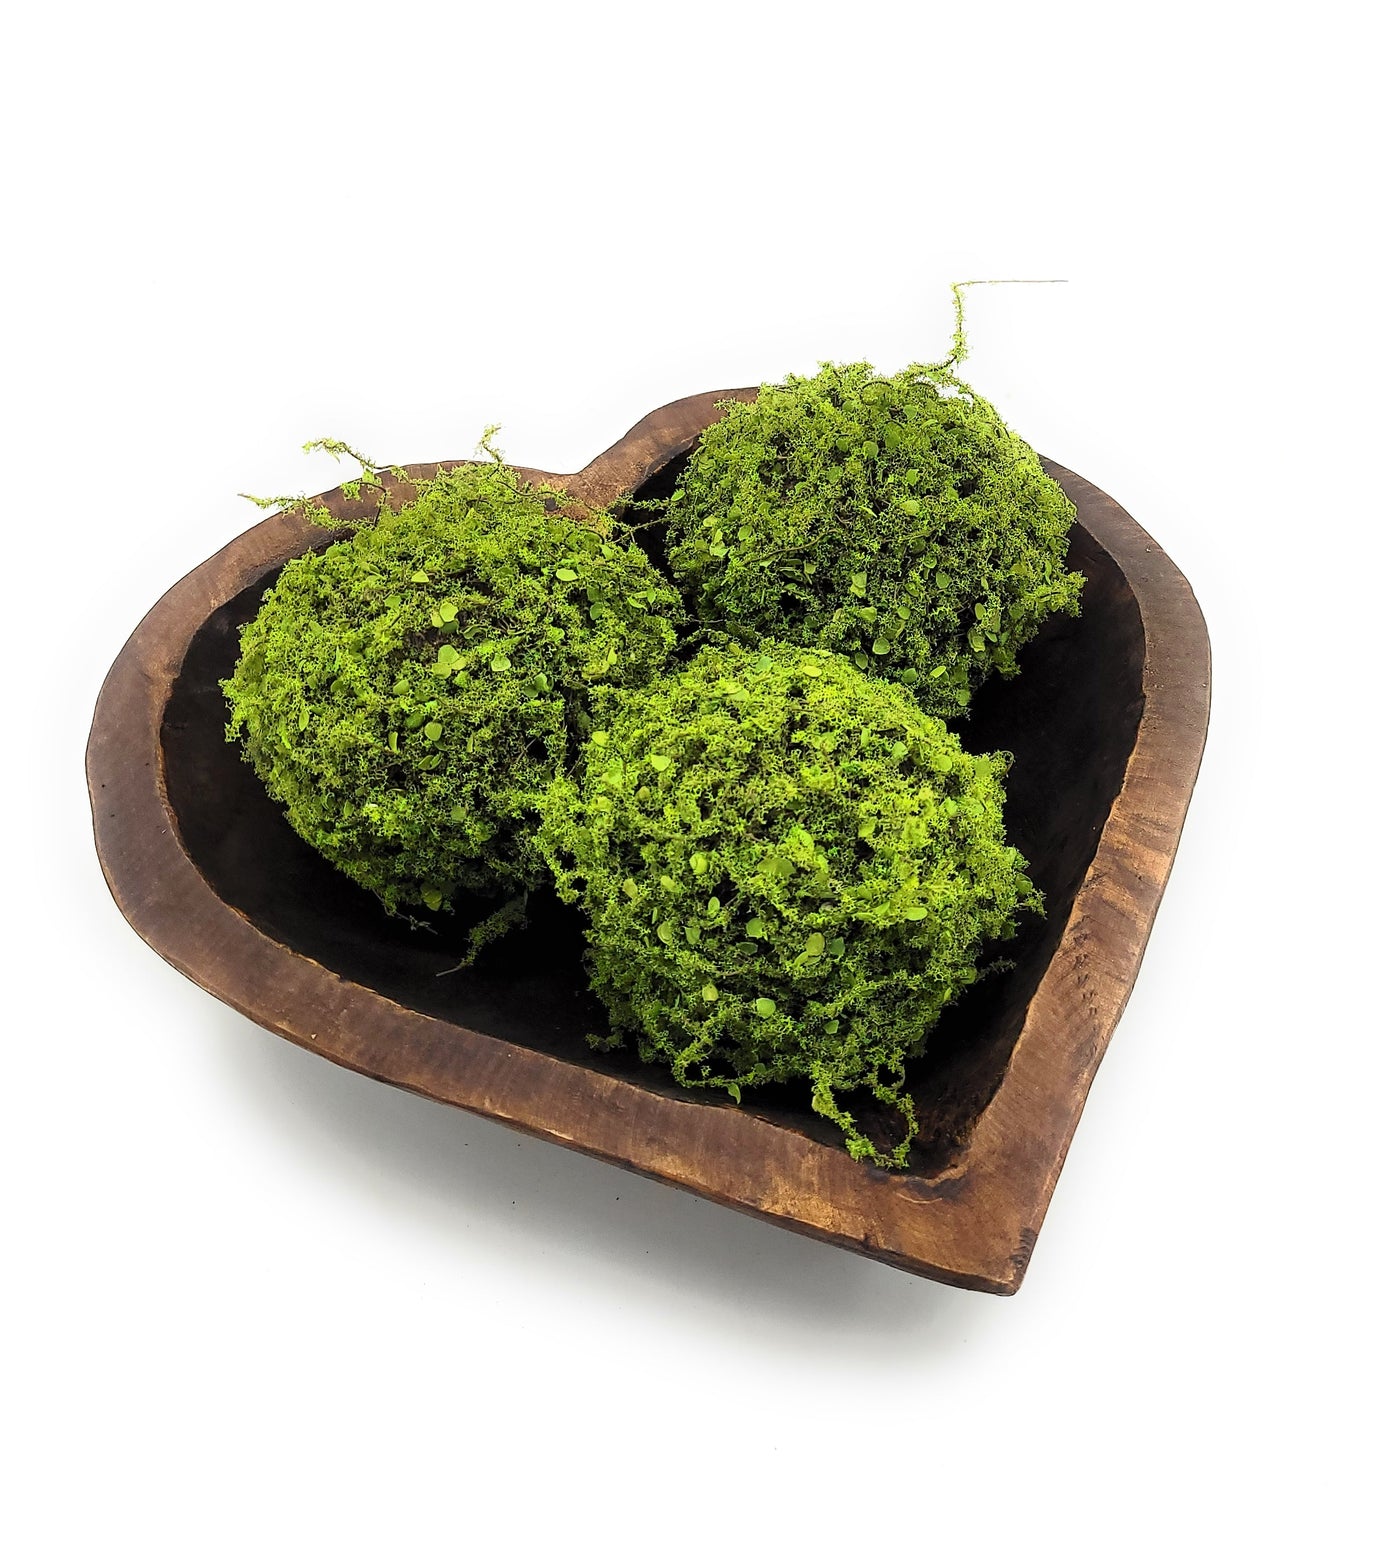 Natural Green Faux Moss Ball Decorative Bowl Filler - Set of 3